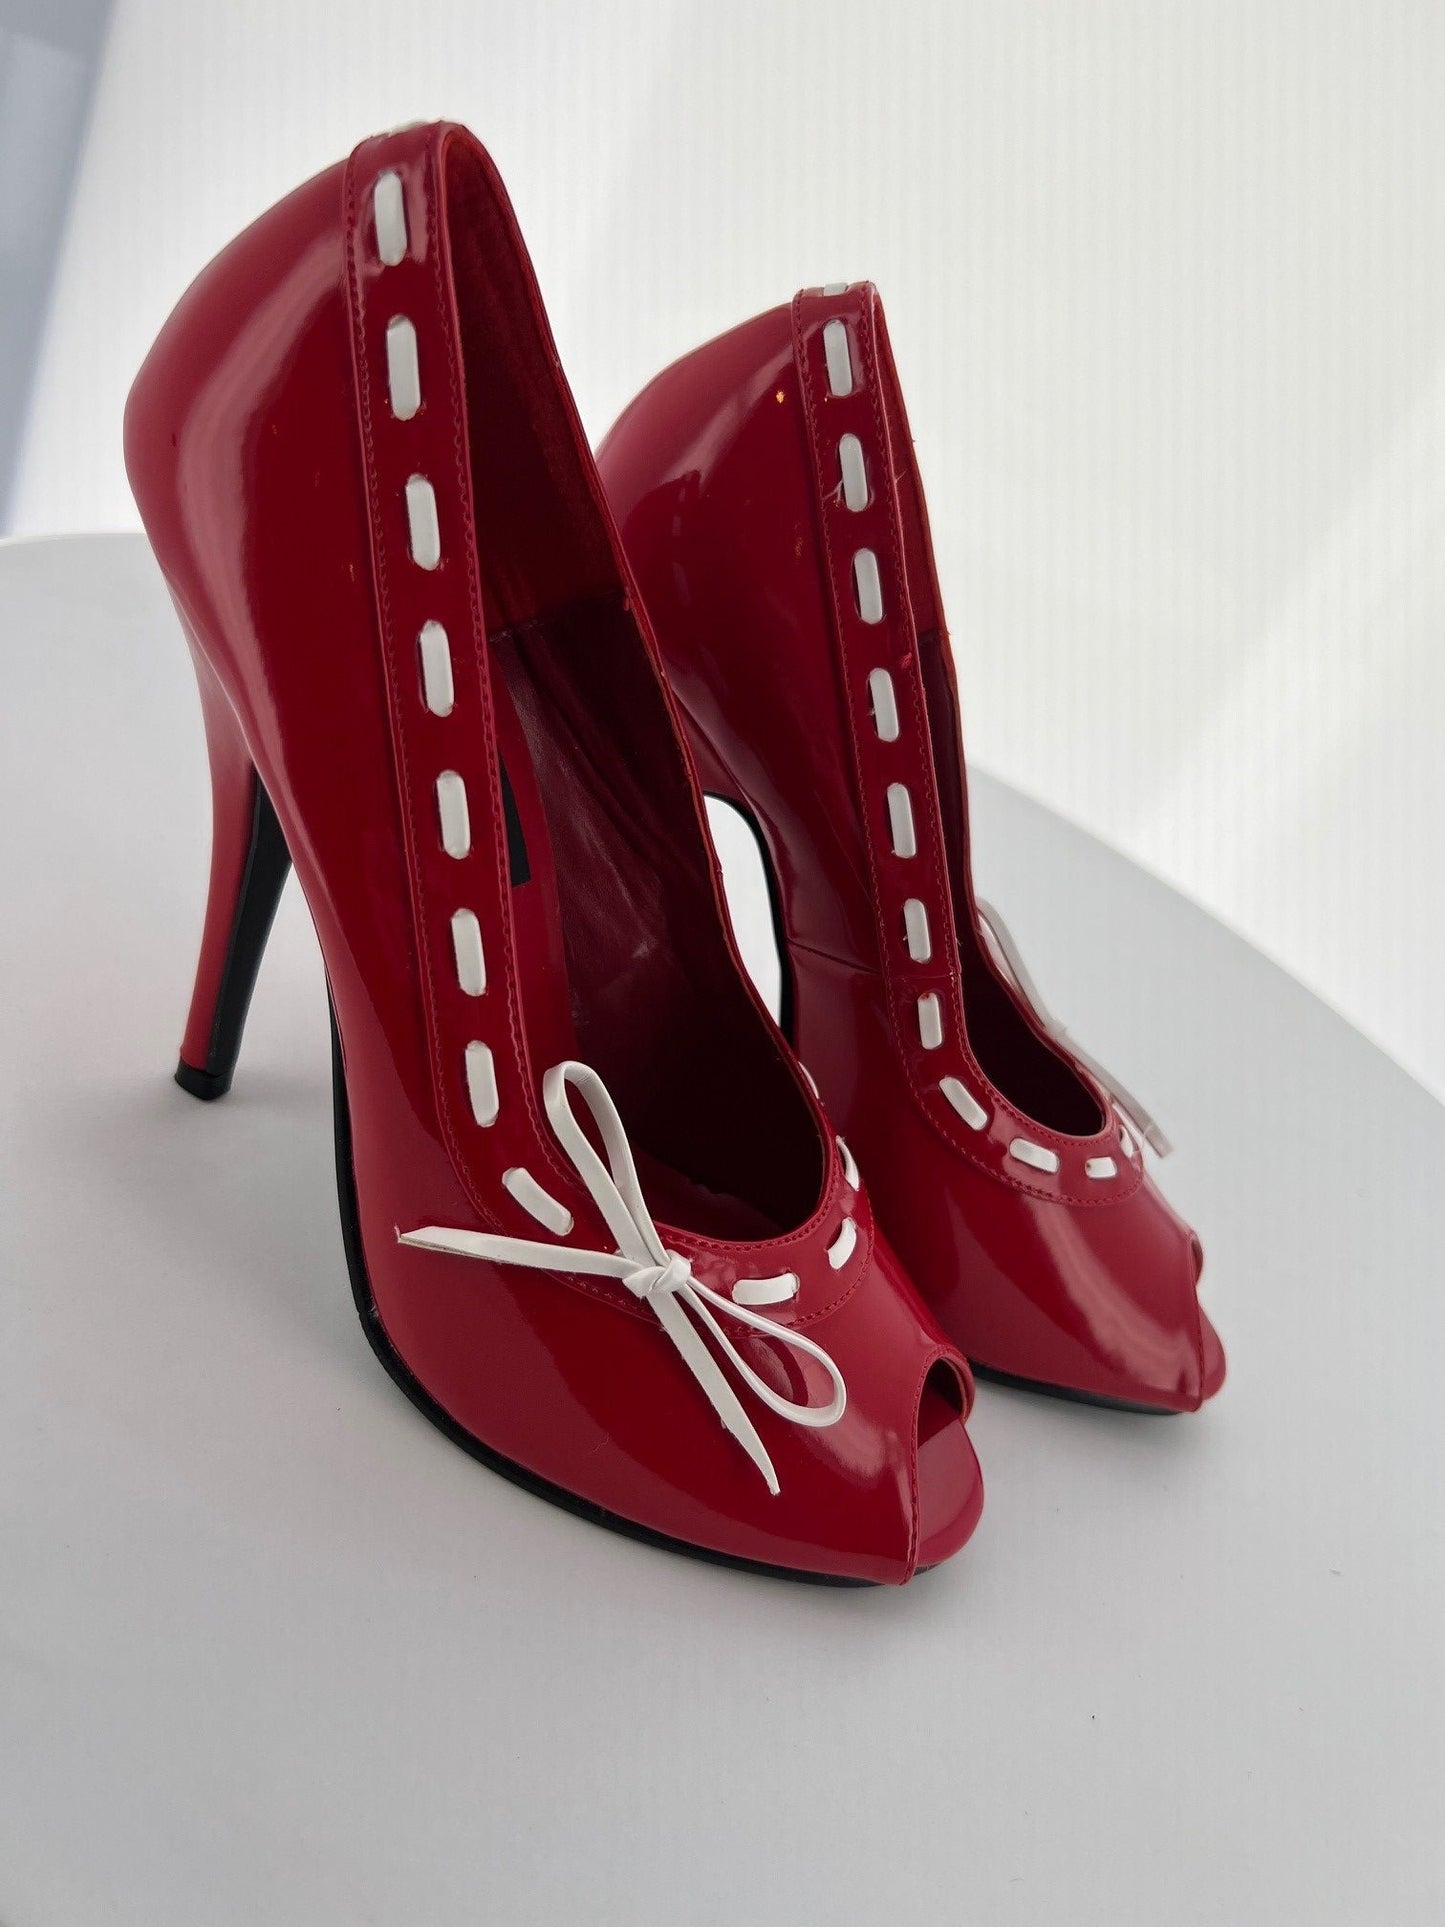 SEDUCE-219 Pleaser Patent High Heel Alternative Footwear Discontinued Sale Stock